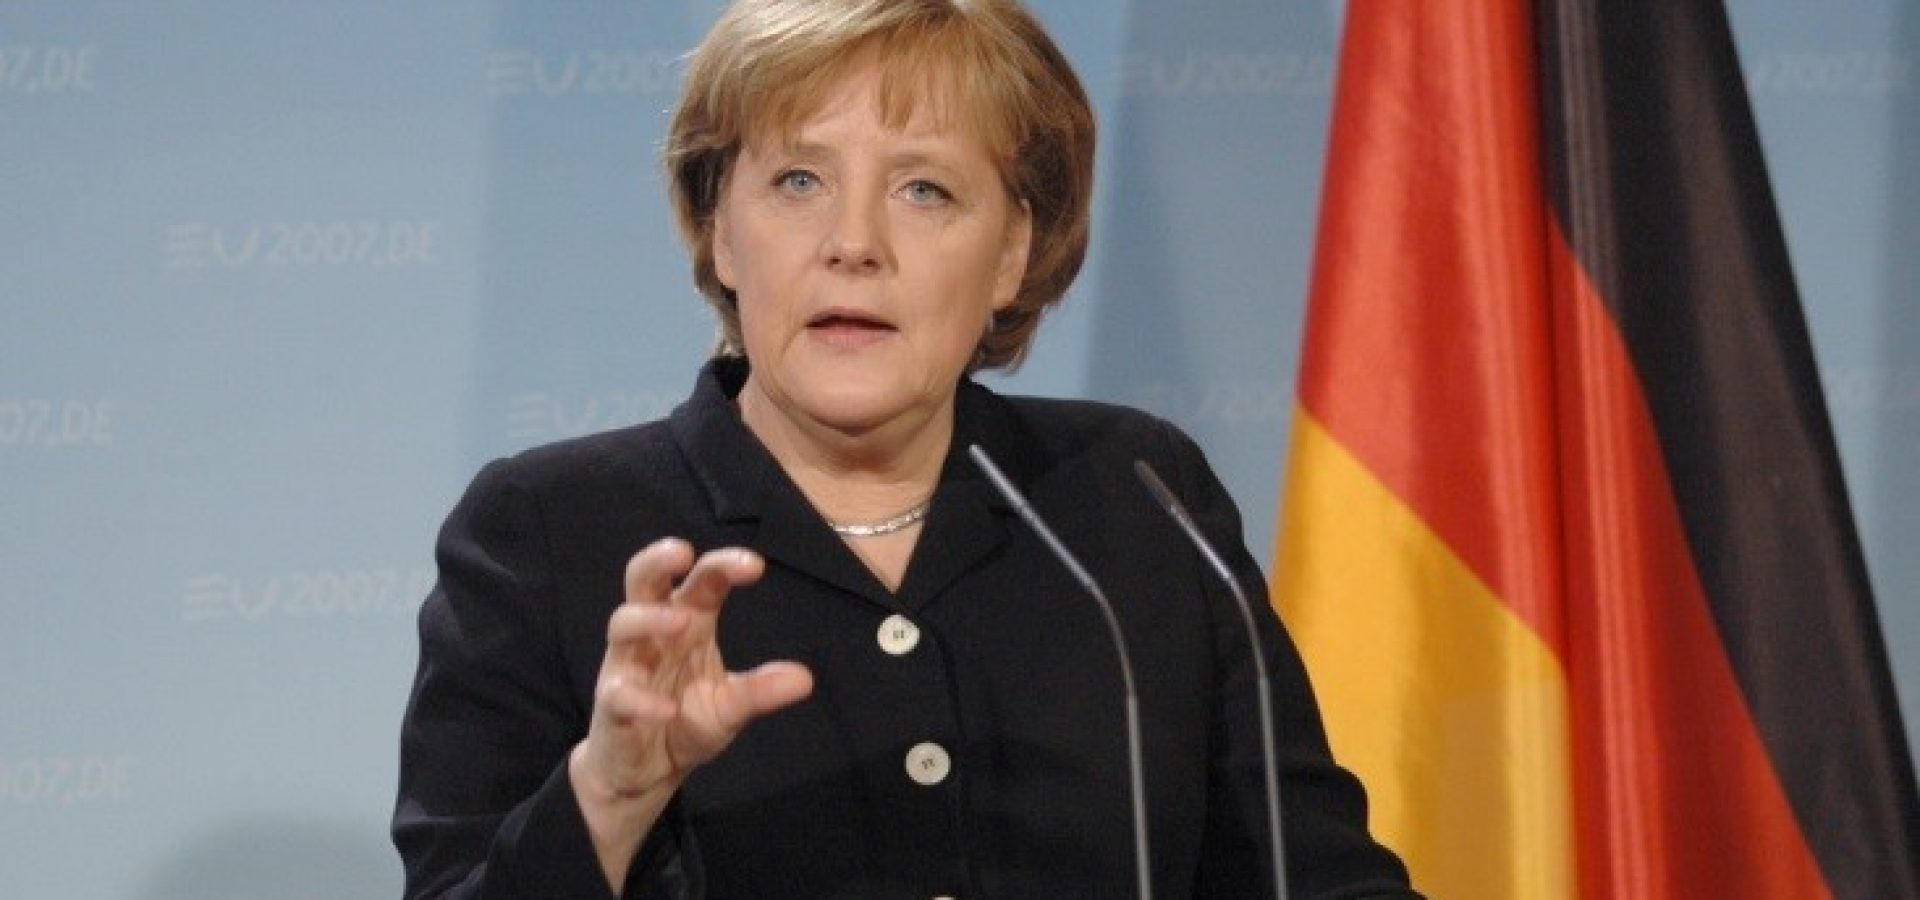 Euro Slides on German Chancellor News